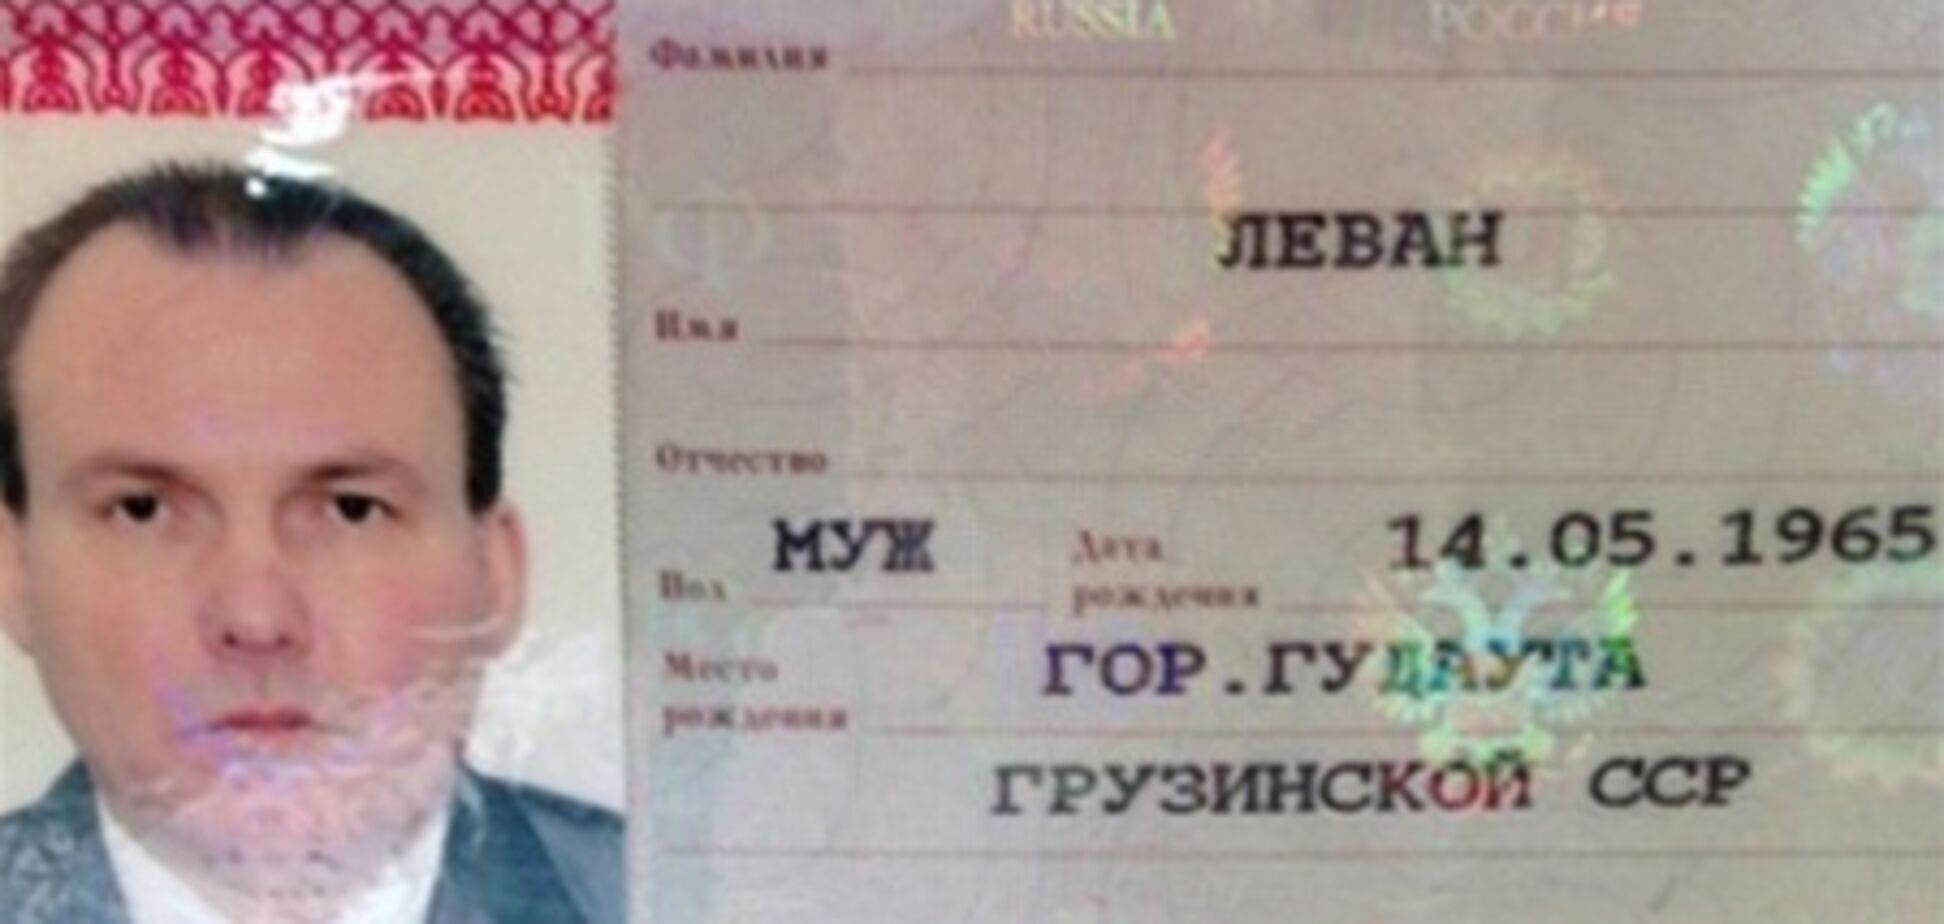 Біженець з Грузії взяв прізвище Путін